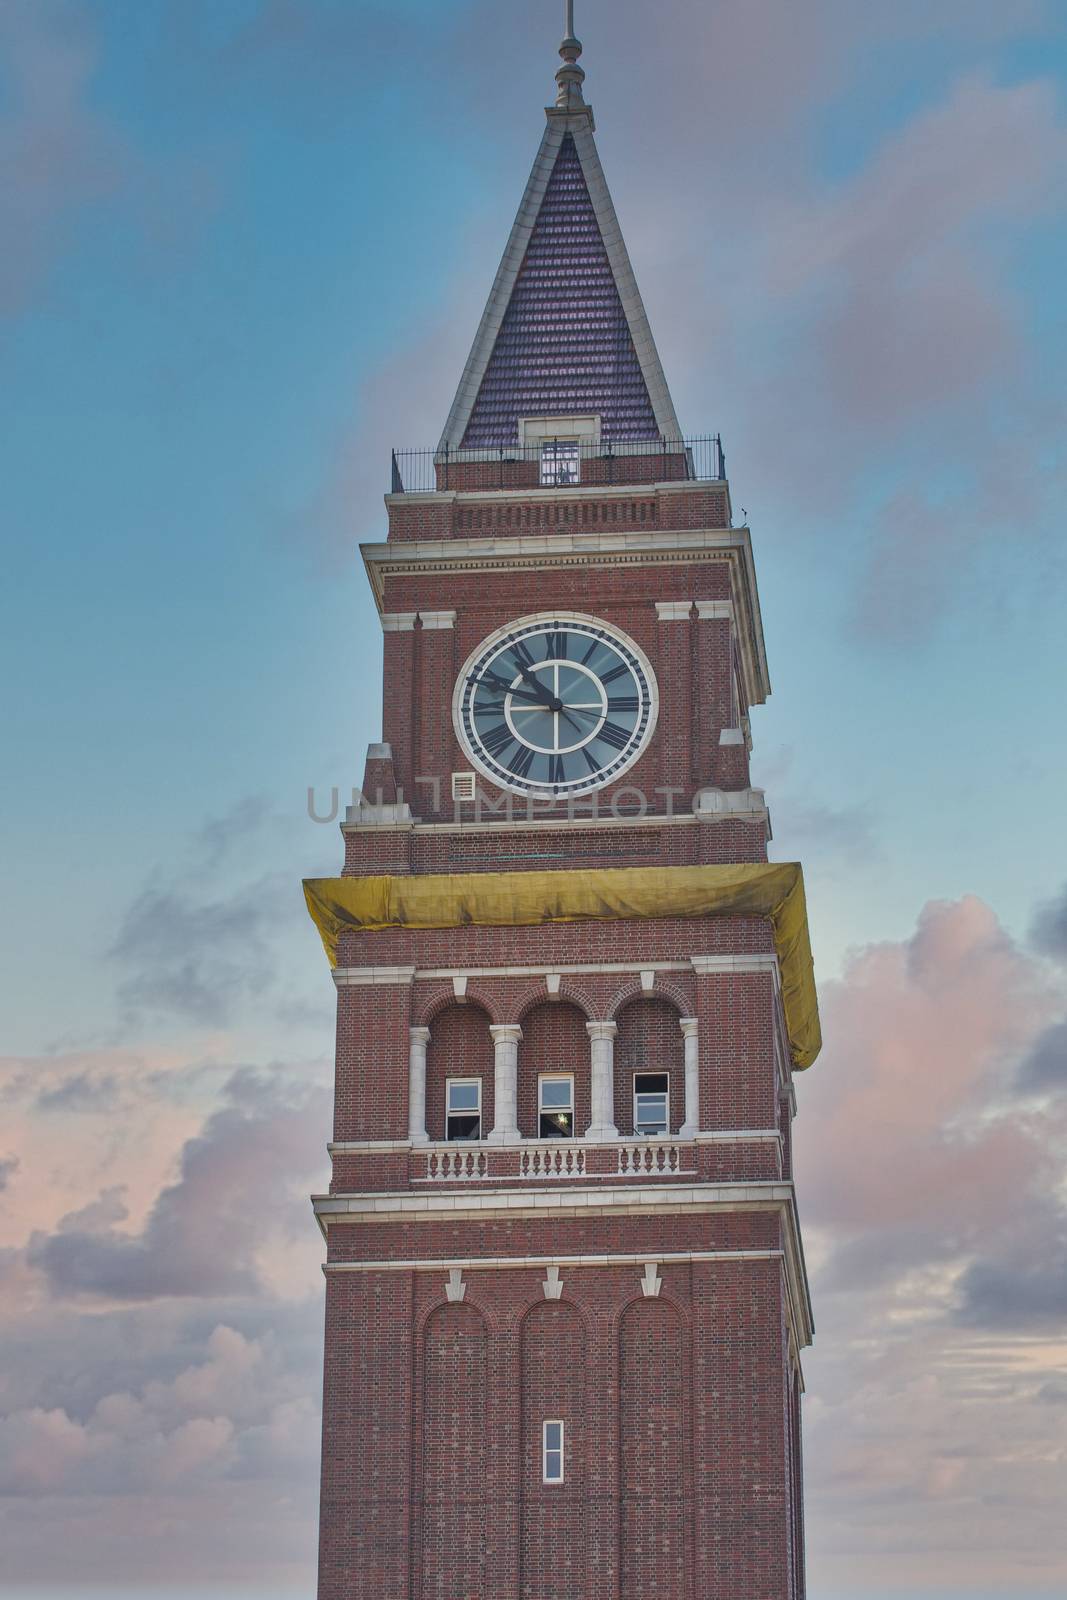 Old Brick Clock Tower by dbvirago